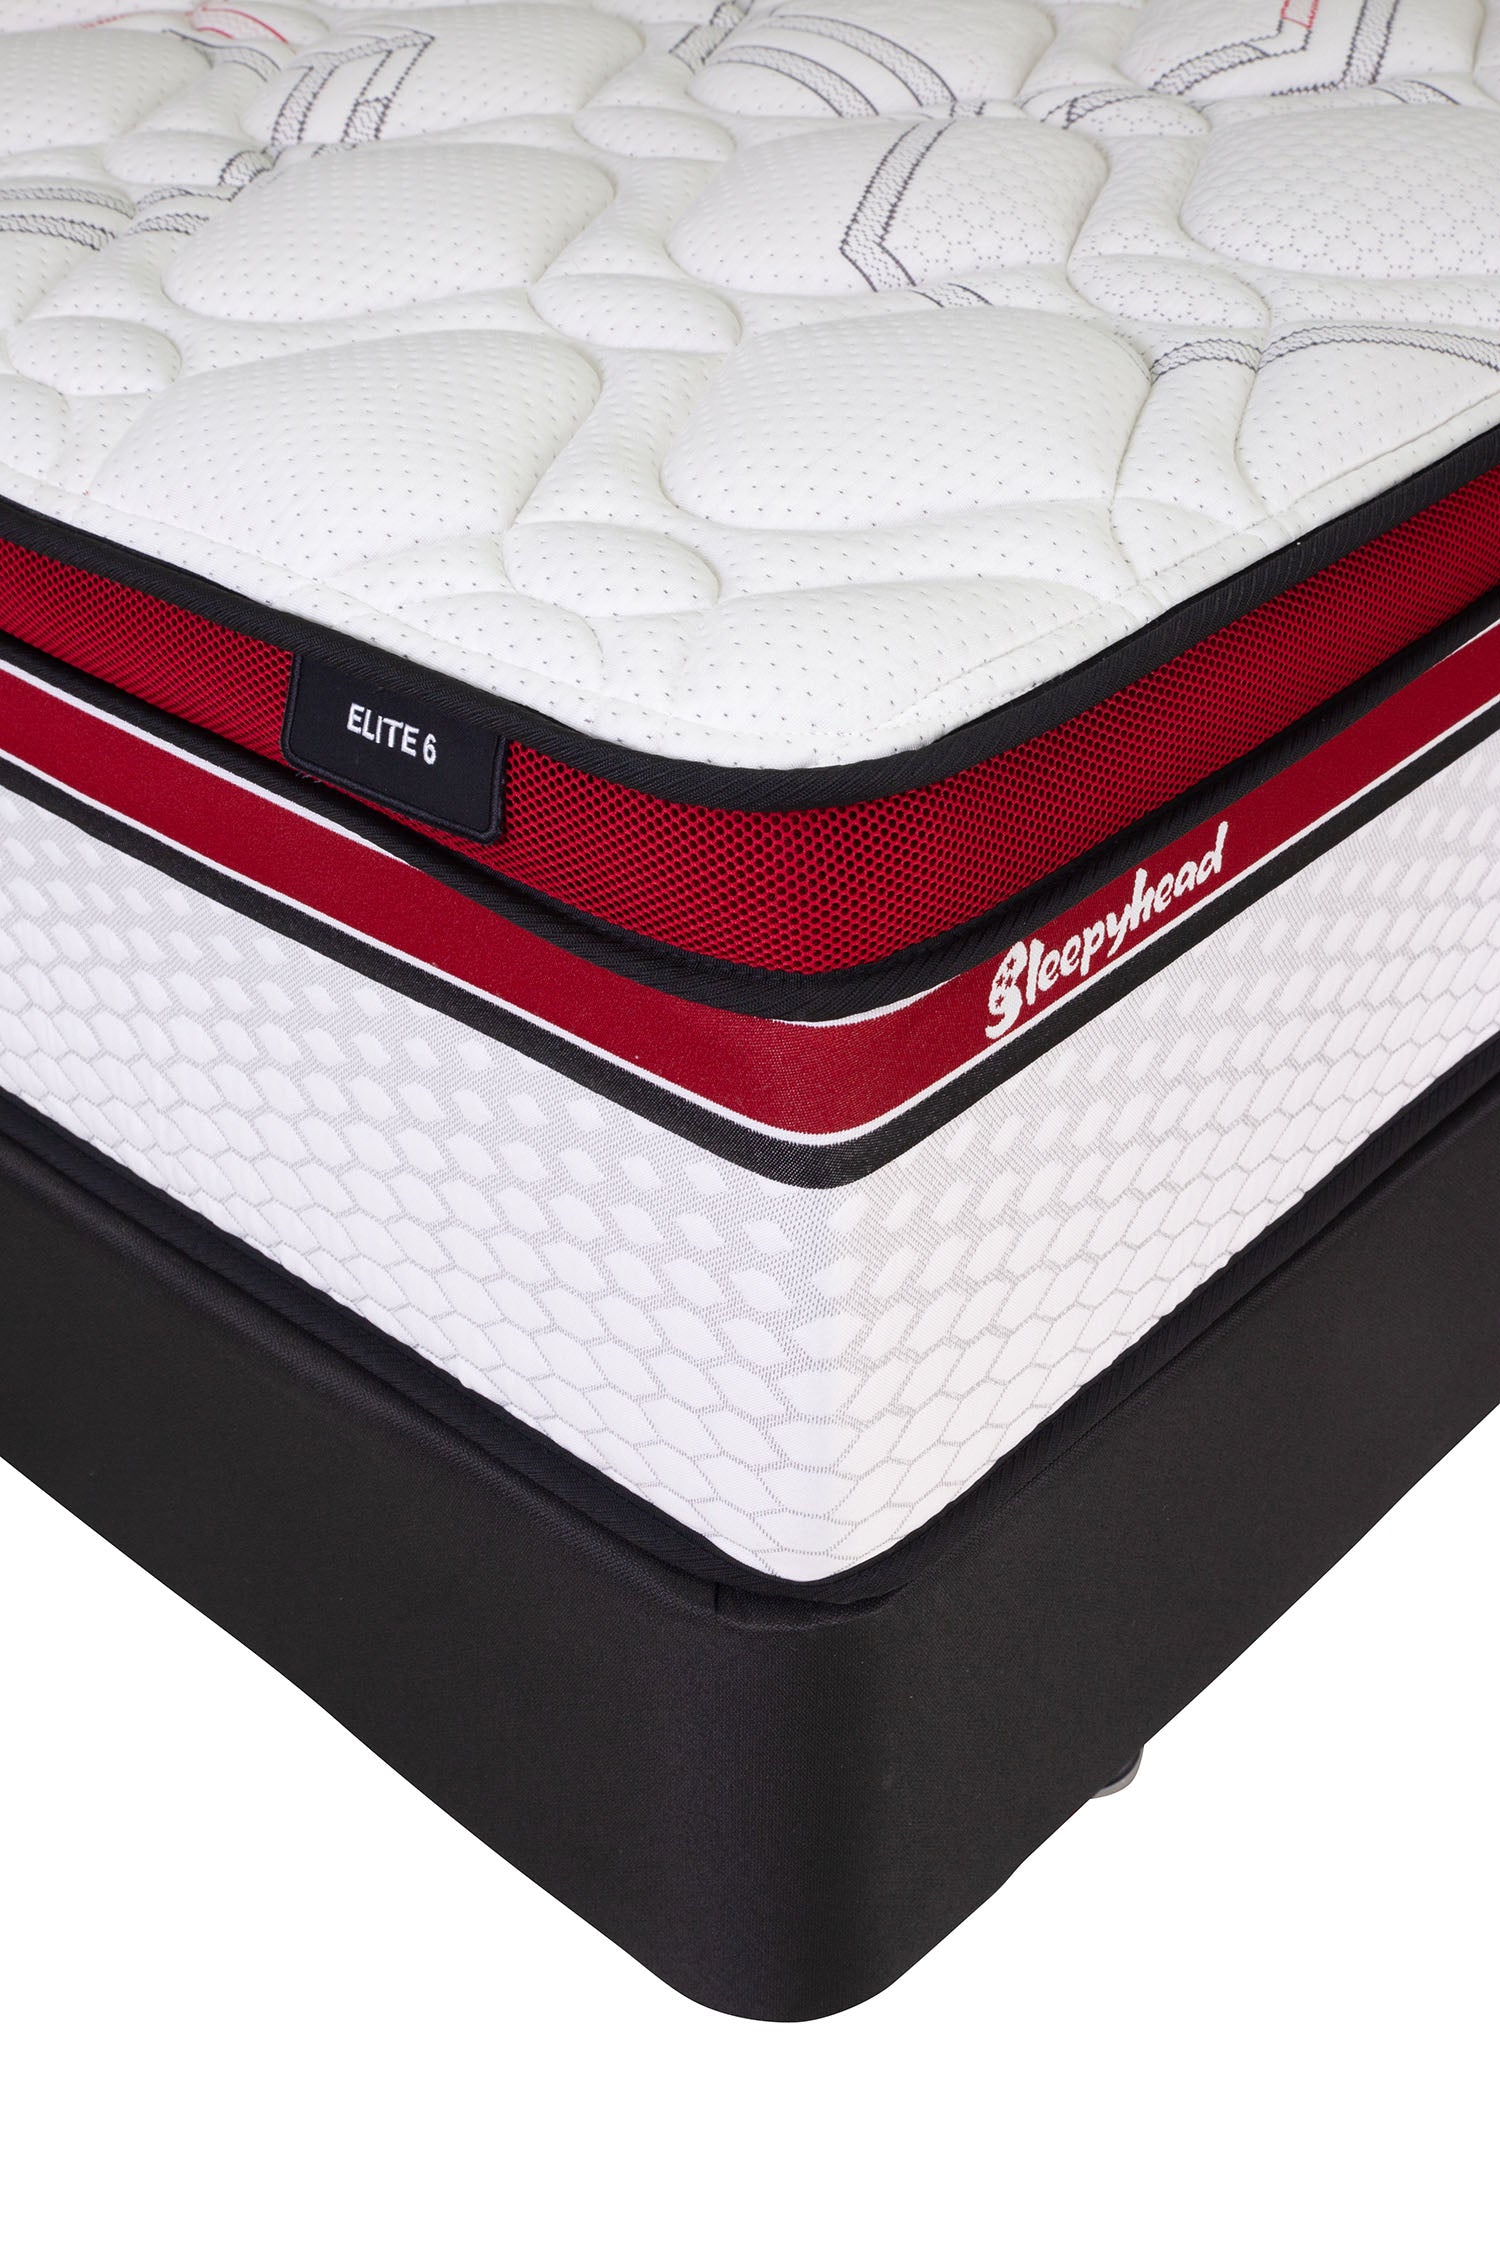 elite6-long-double-mattress-3